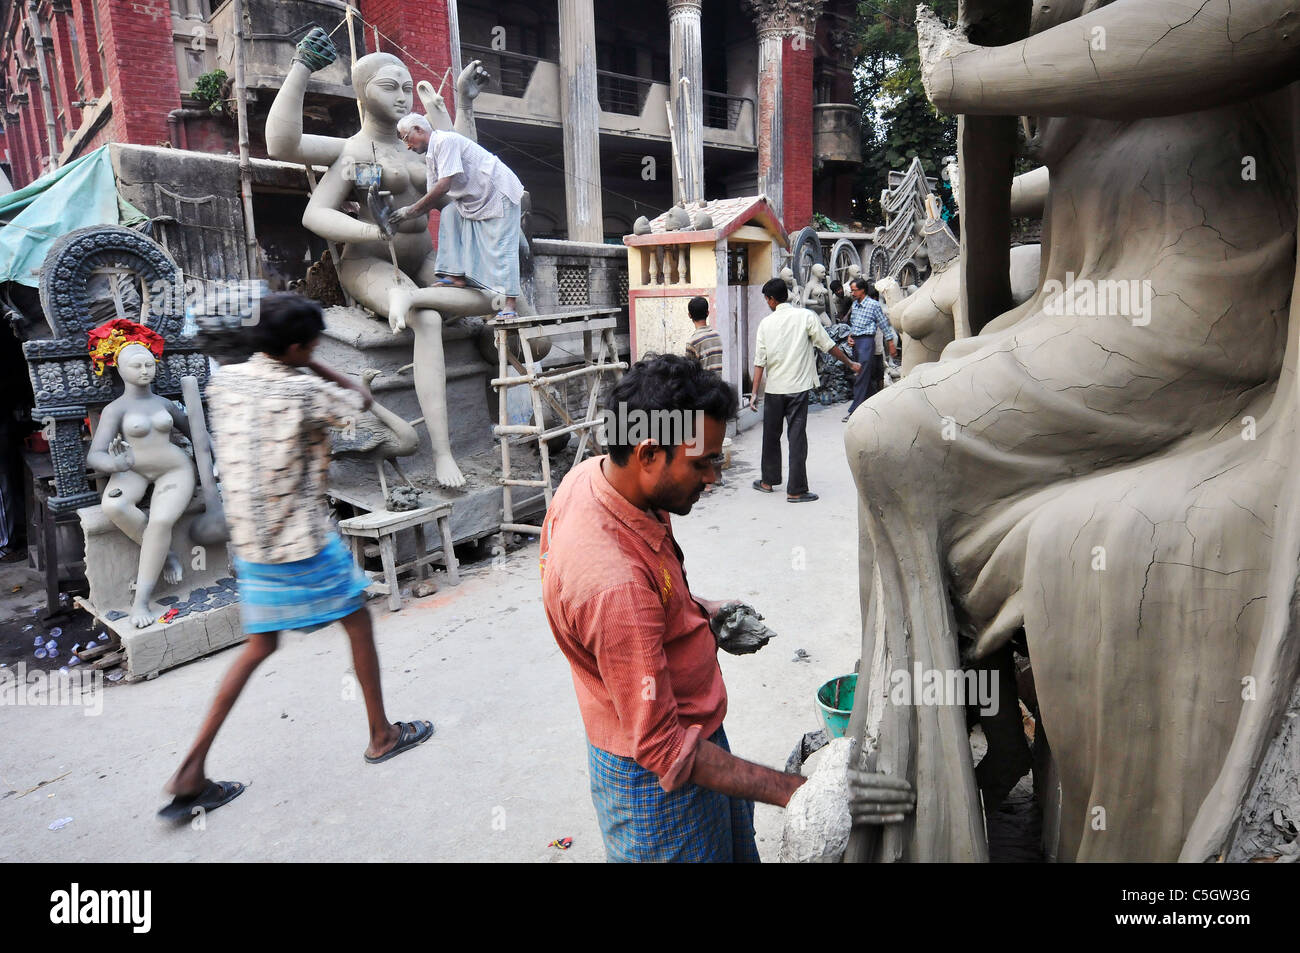 Idols of Hindu gods being made in a workshop in Calcutta. Stock Photo